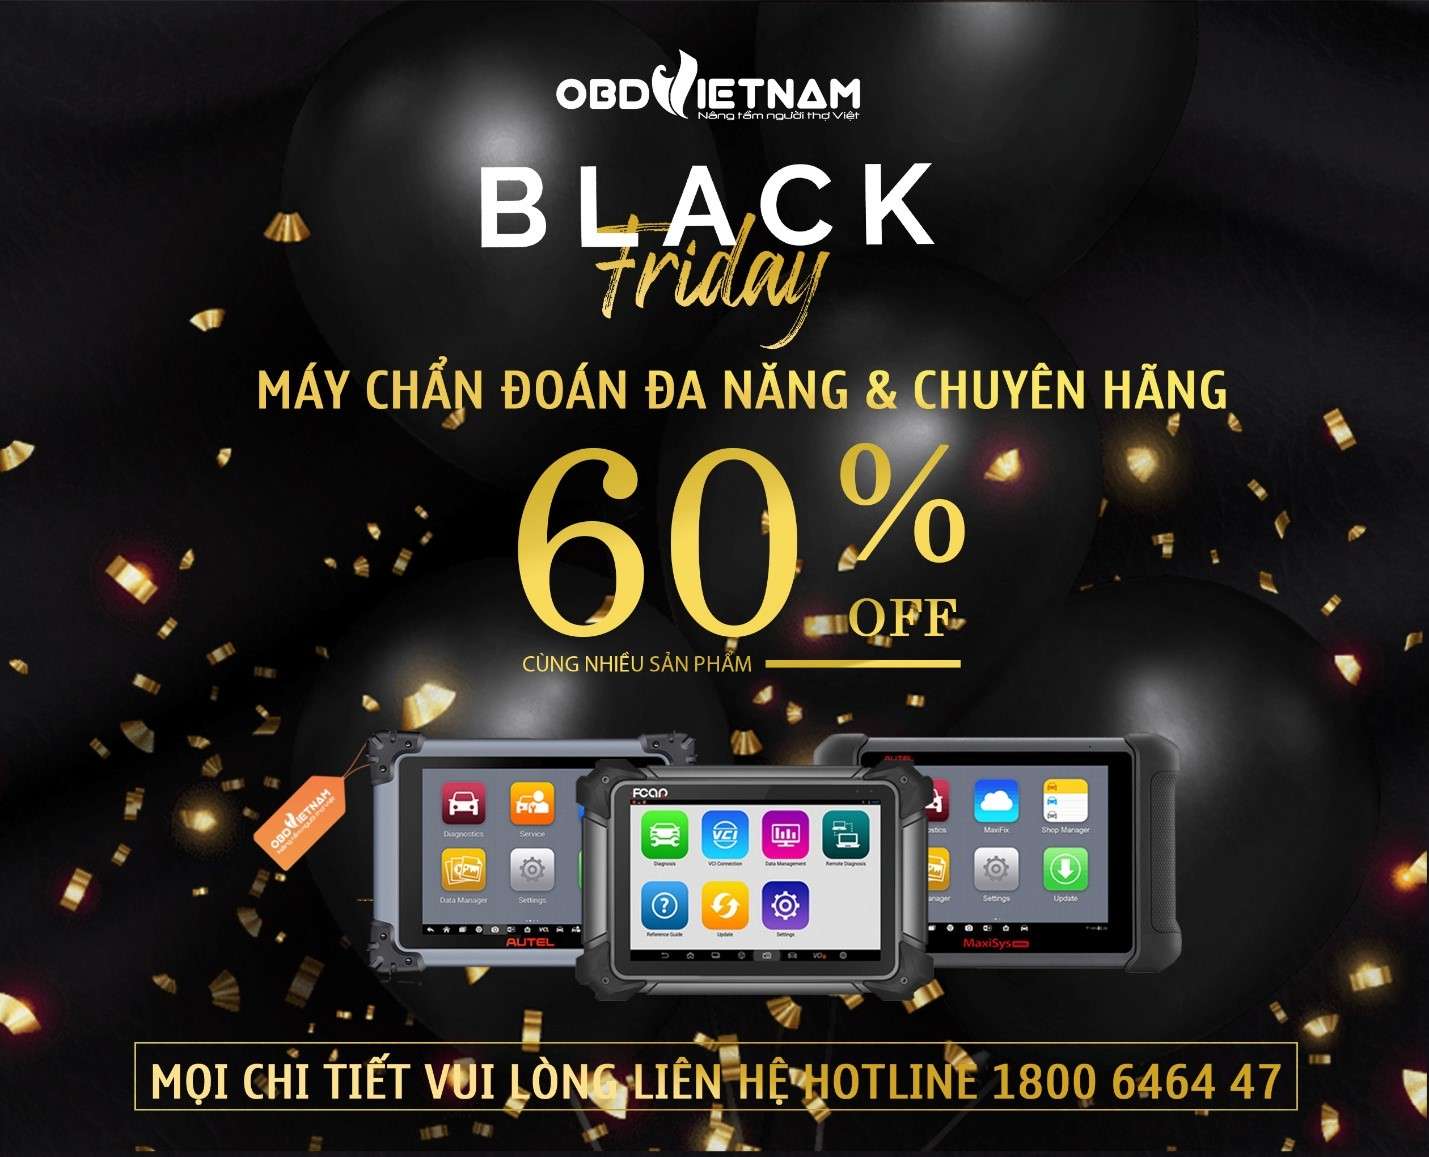 black-friday-2020-giam-gia-may-chan-doan-len-den-60%-obdvietnam